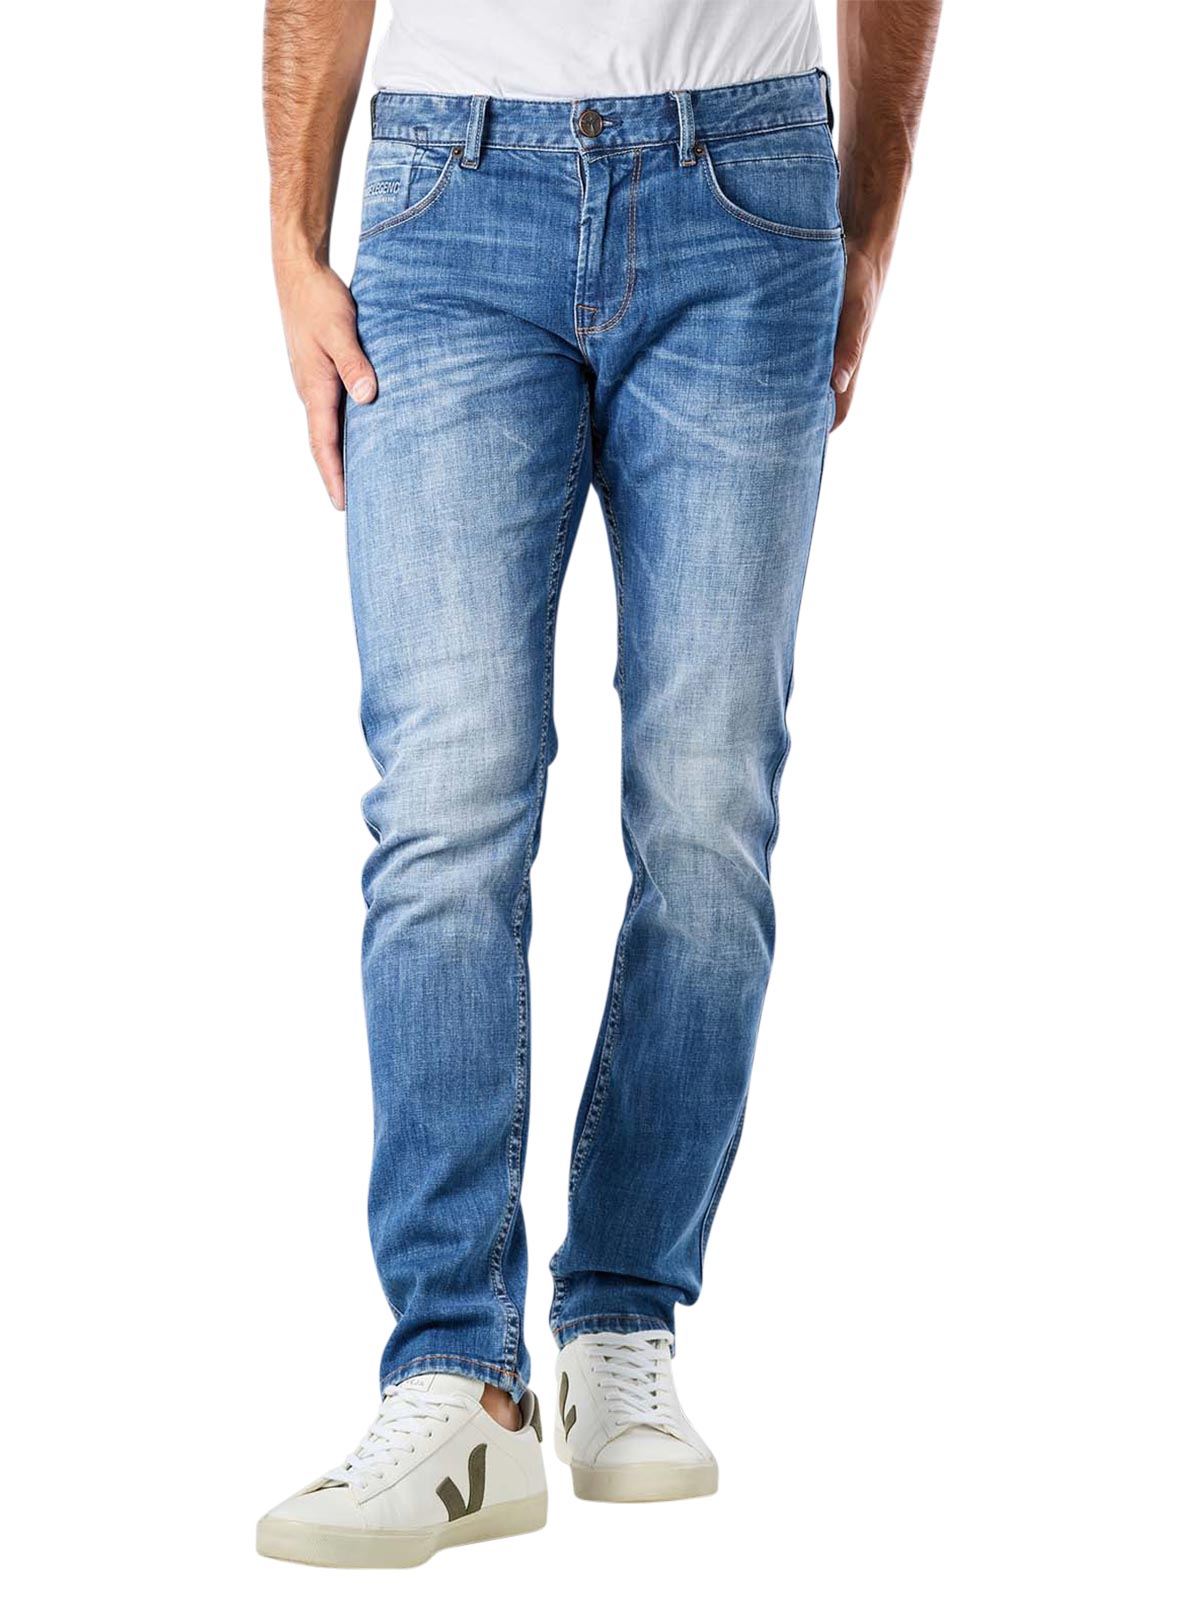 menigte blouse Wieg PME Legend Jeans Nightflight Stretch slub denim PME Legend Men's Jeans |  Free Shipping on BEBASIC.CH - SIMPLY LOOK GOOD